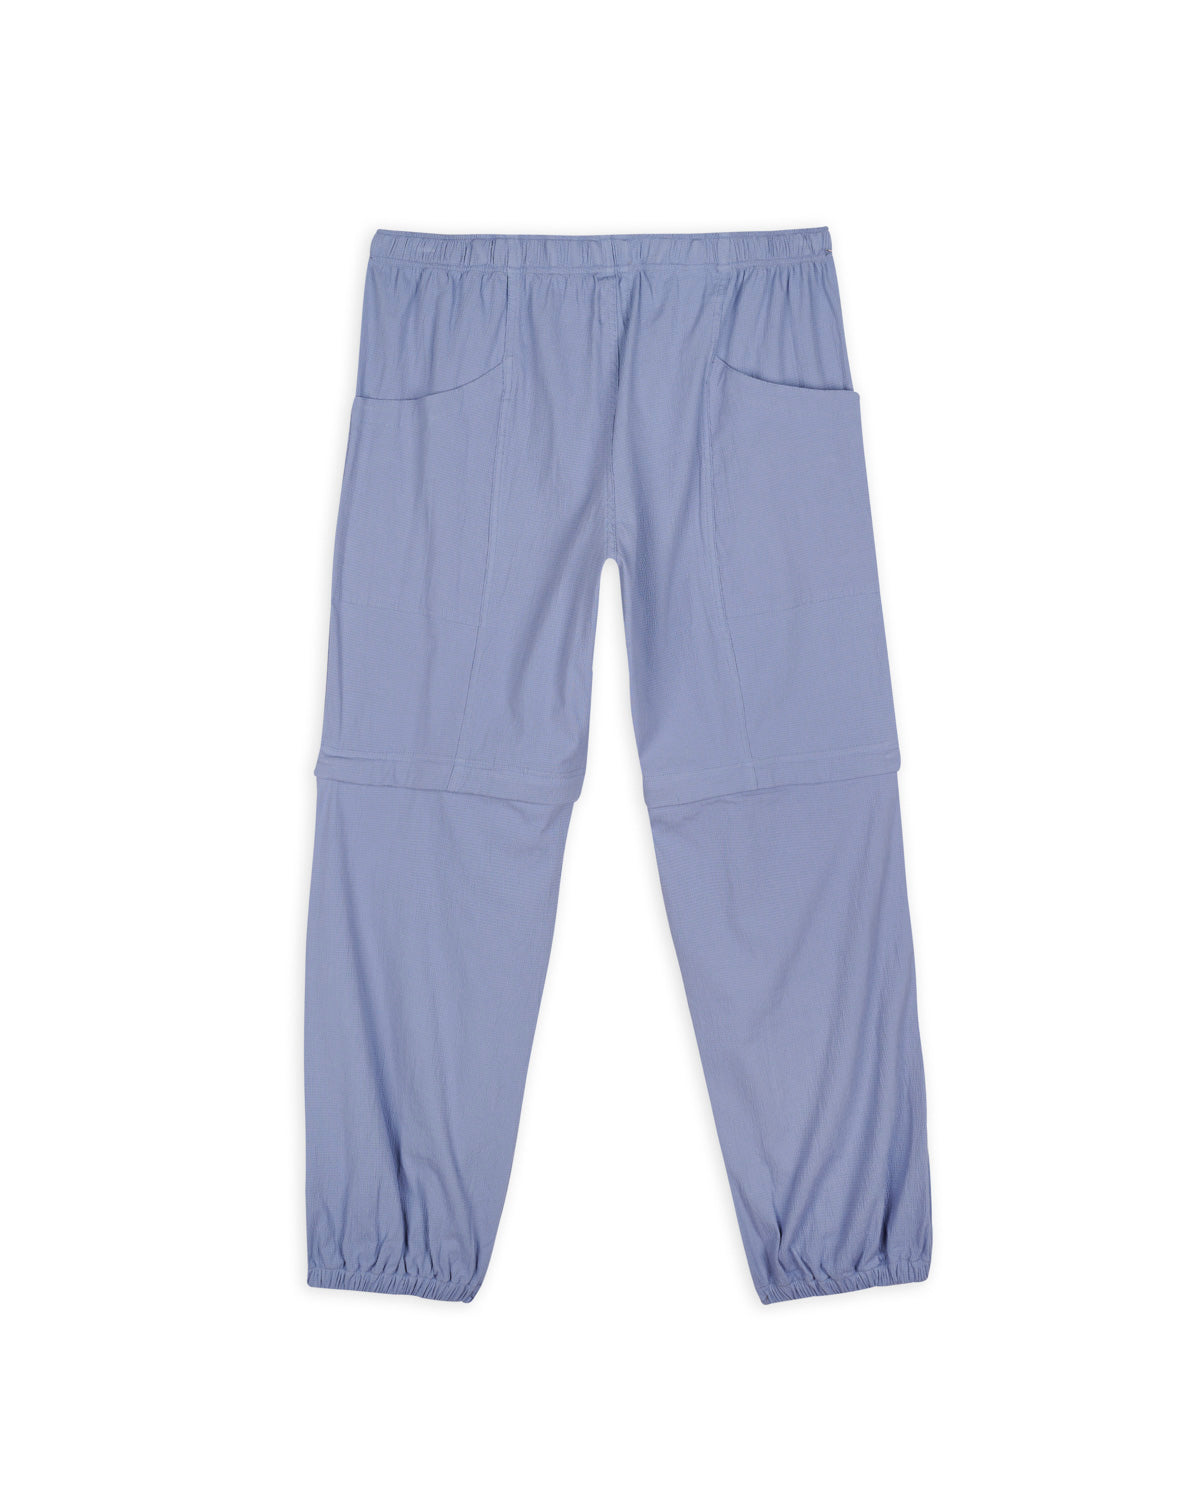 Alpinist Seersucker Convertible Pants, Slate Blue